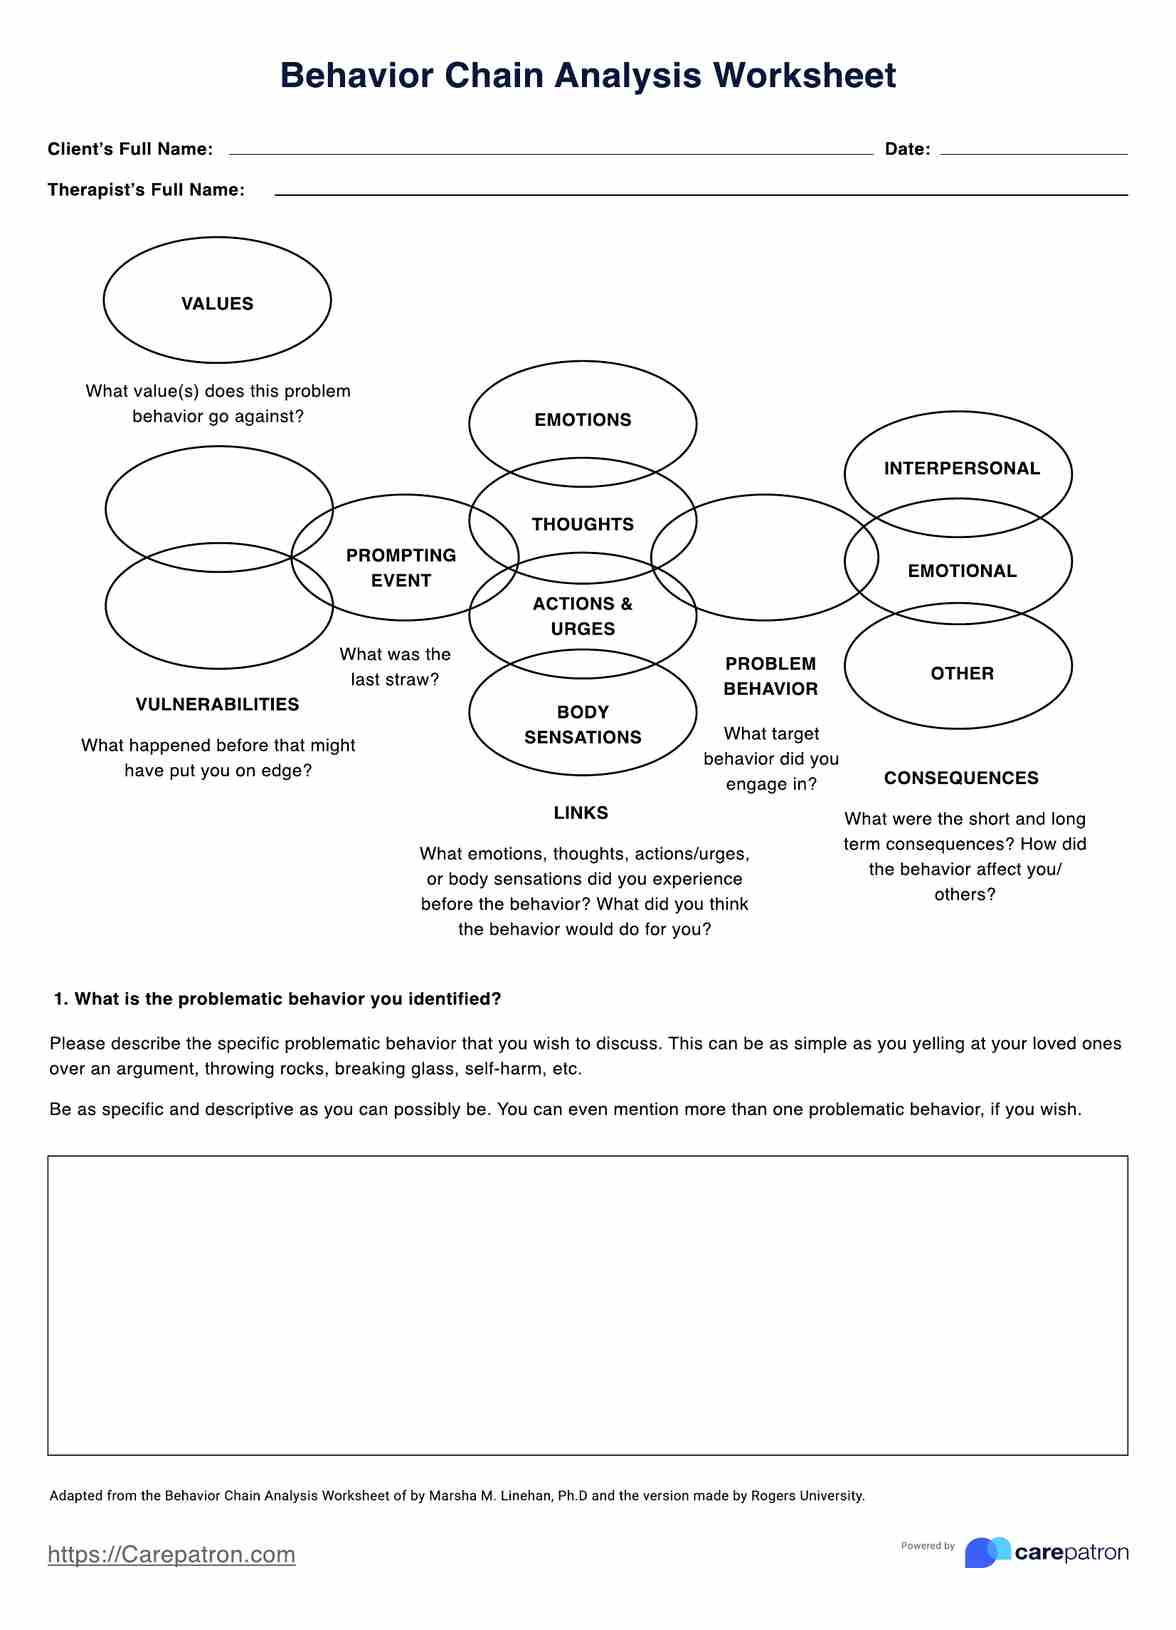 Behavior Chain Analysis Worksheet PDF Example